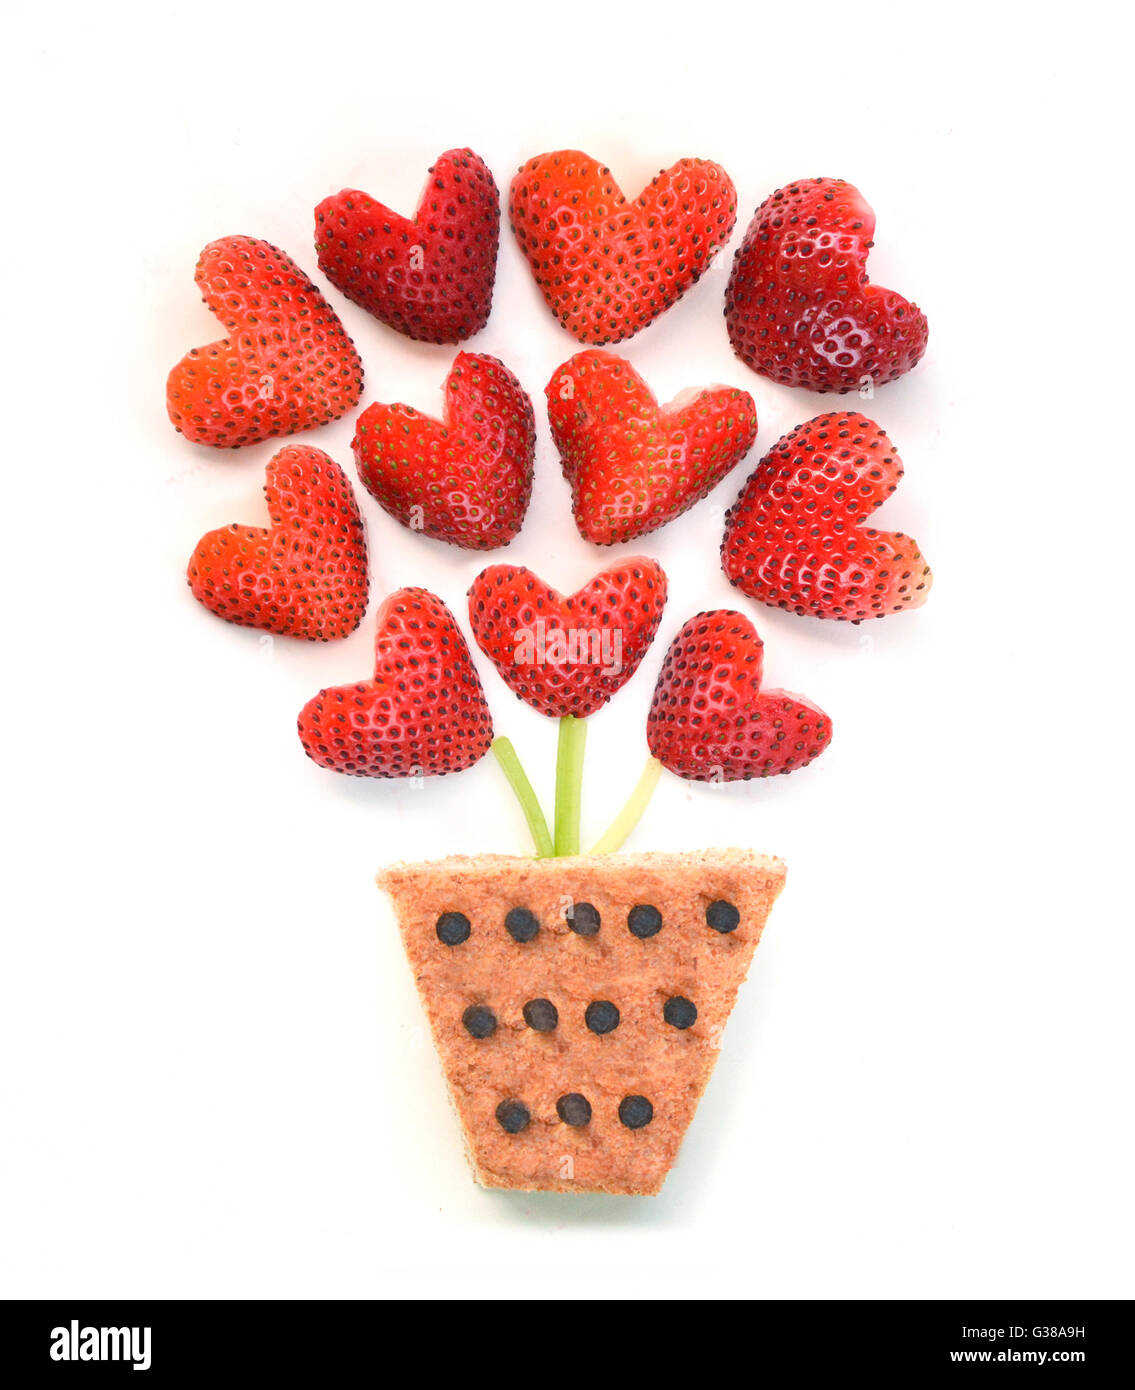 Erdbeeren in einem Blumen-Topf-Konzept Stockfoto